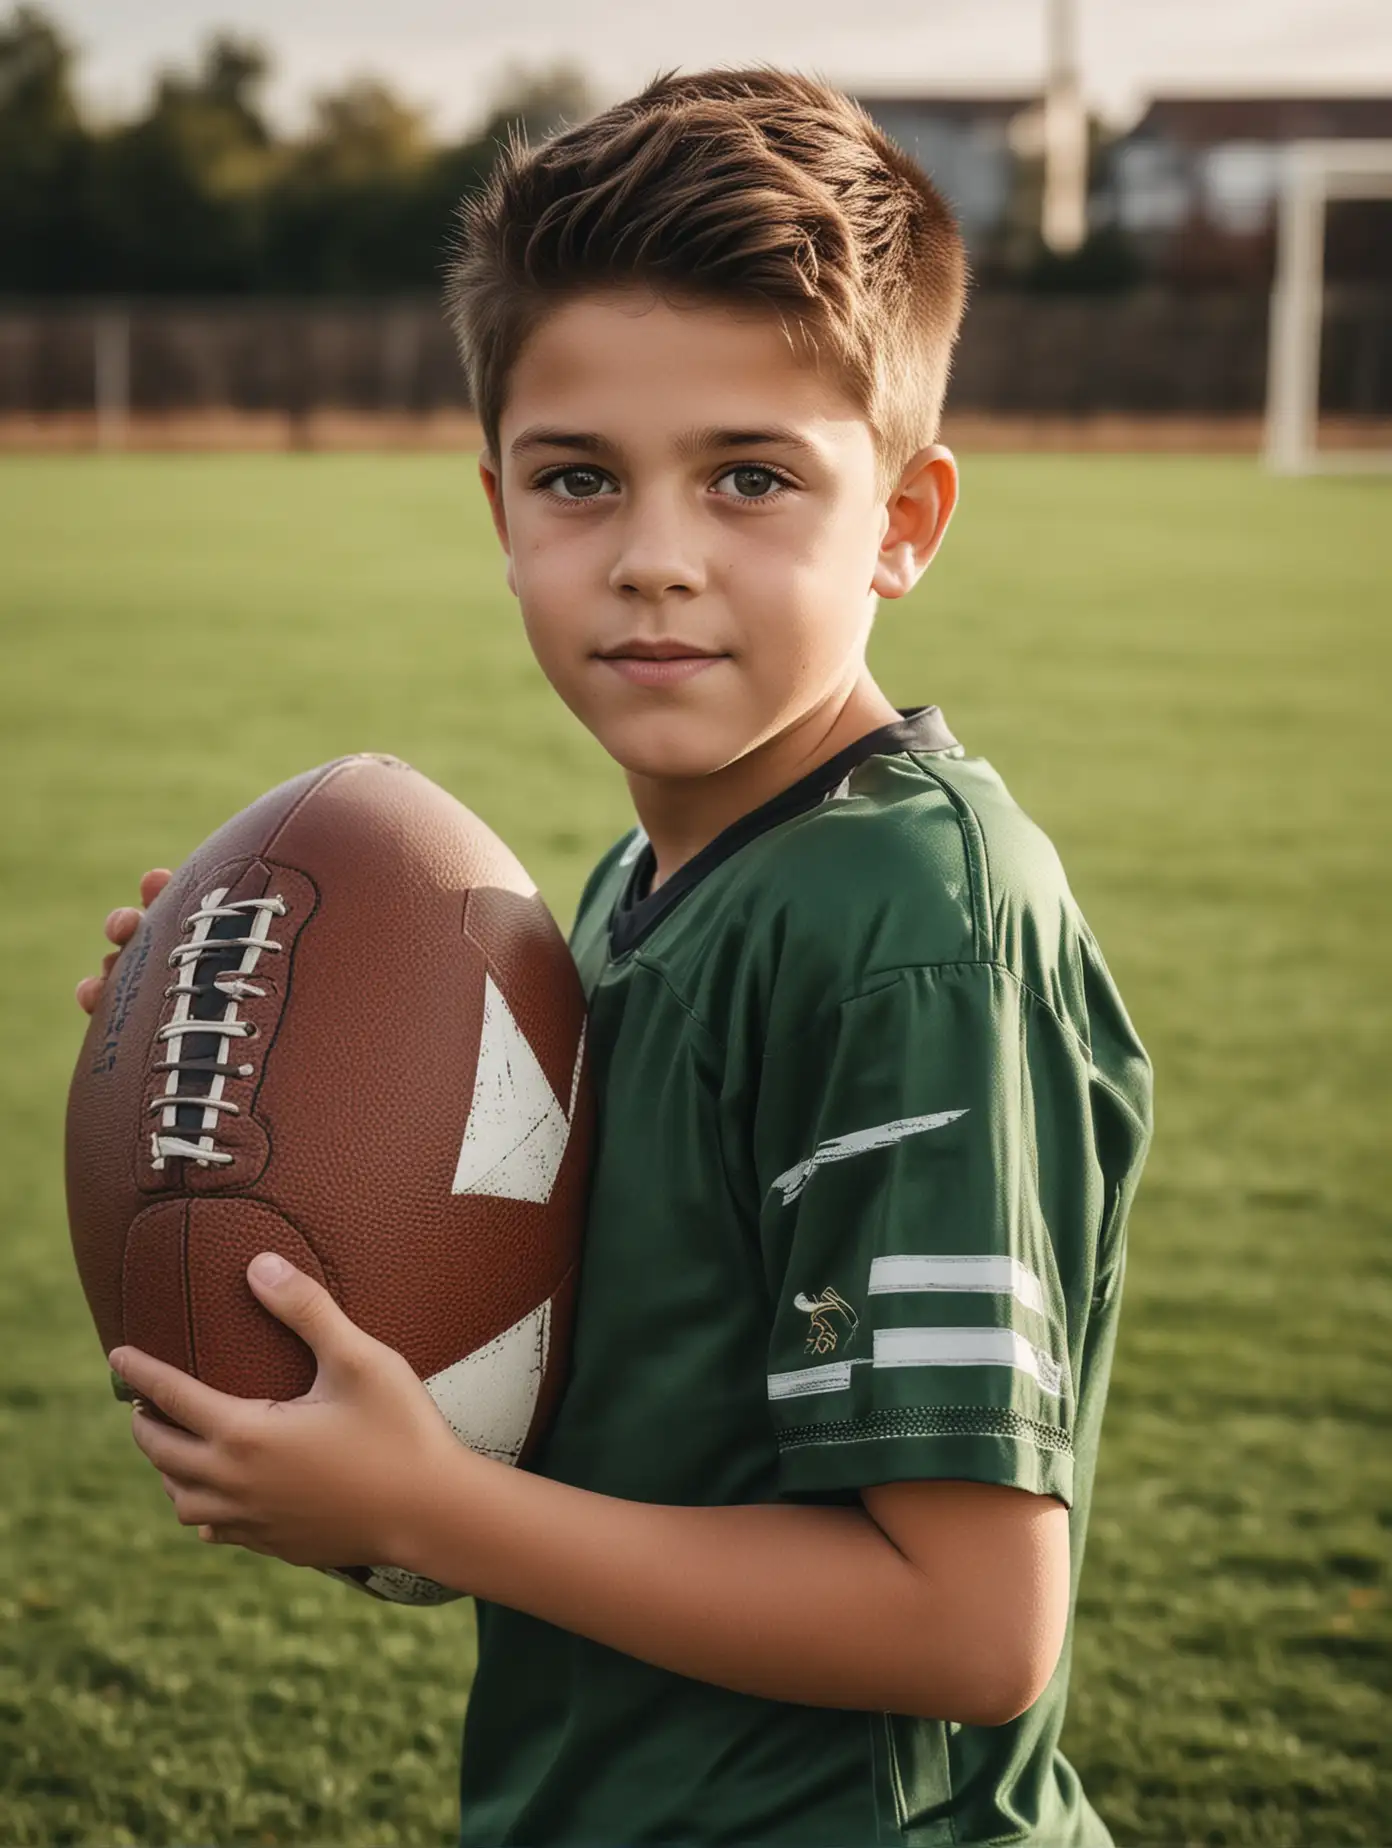 Child Holding Football on Professional Football Field